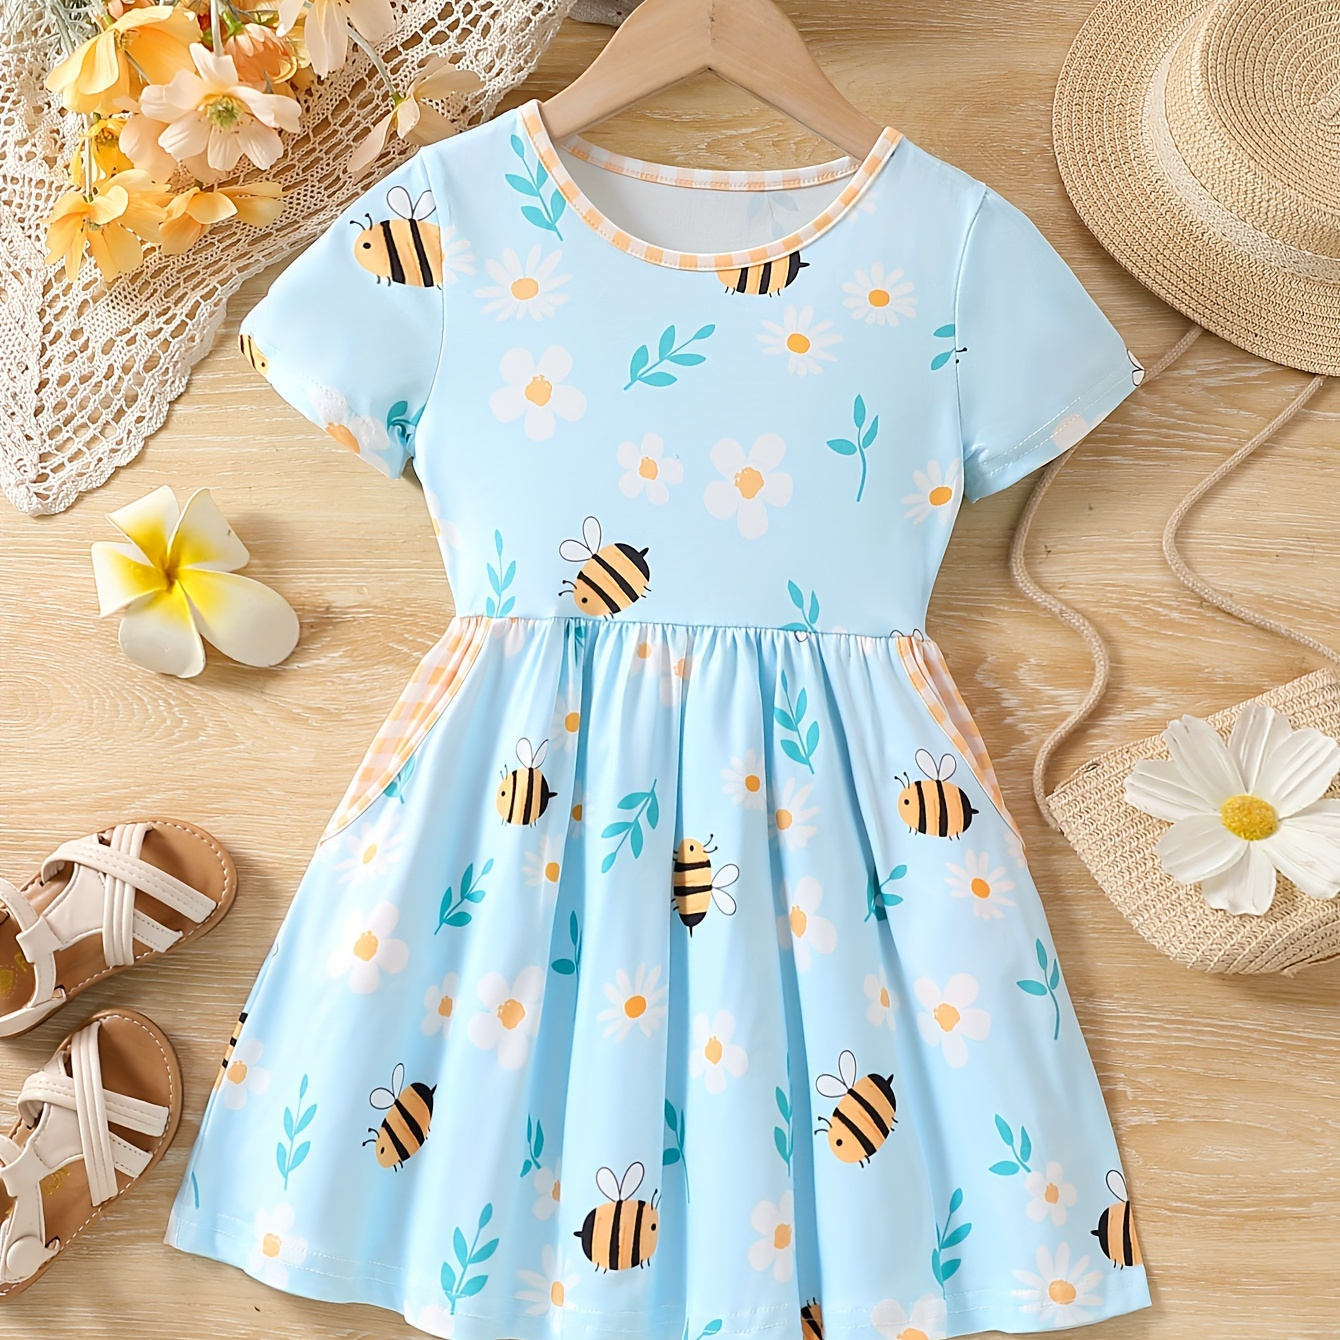 

Girls Cute Daisy Bees Full Print Short Sleeve Dress, Casual A-line Skater Dresses Summer Clothing